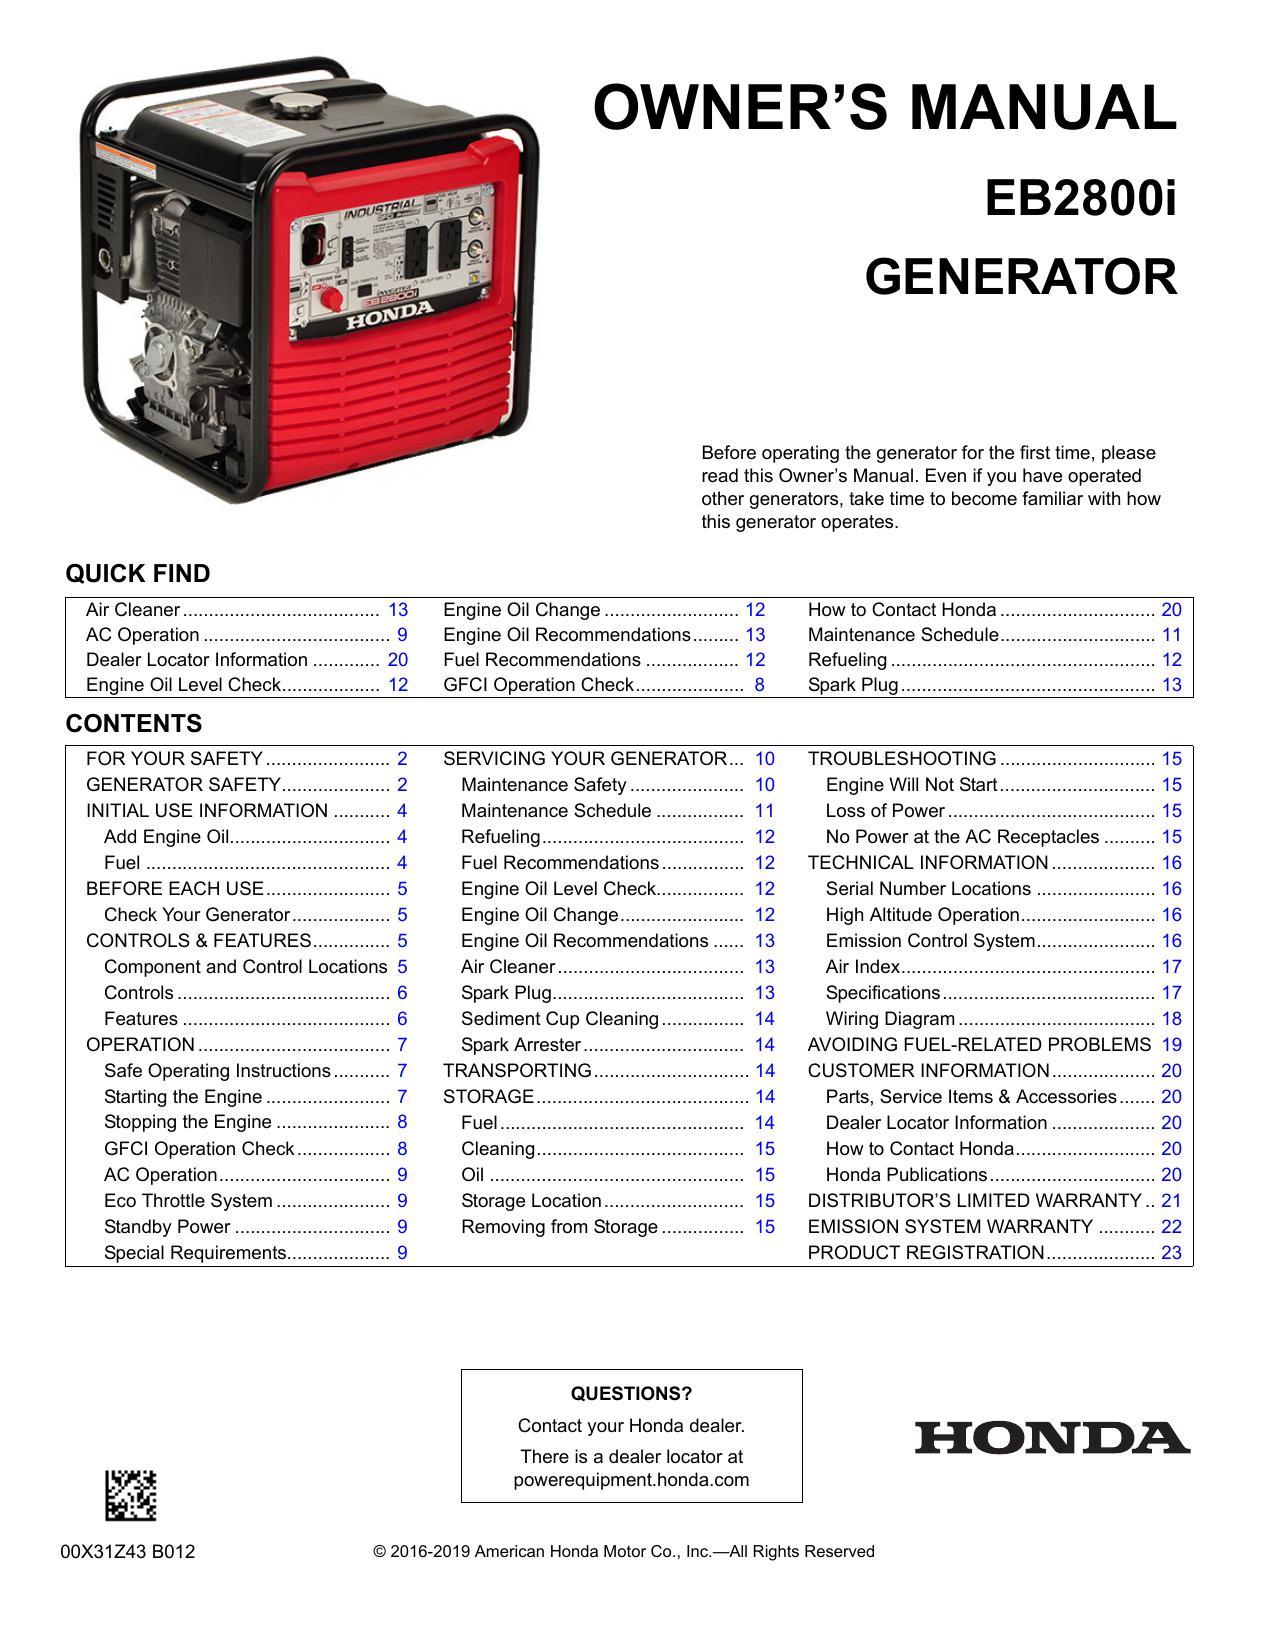 owners-manual-eb2800i-generator.pdf